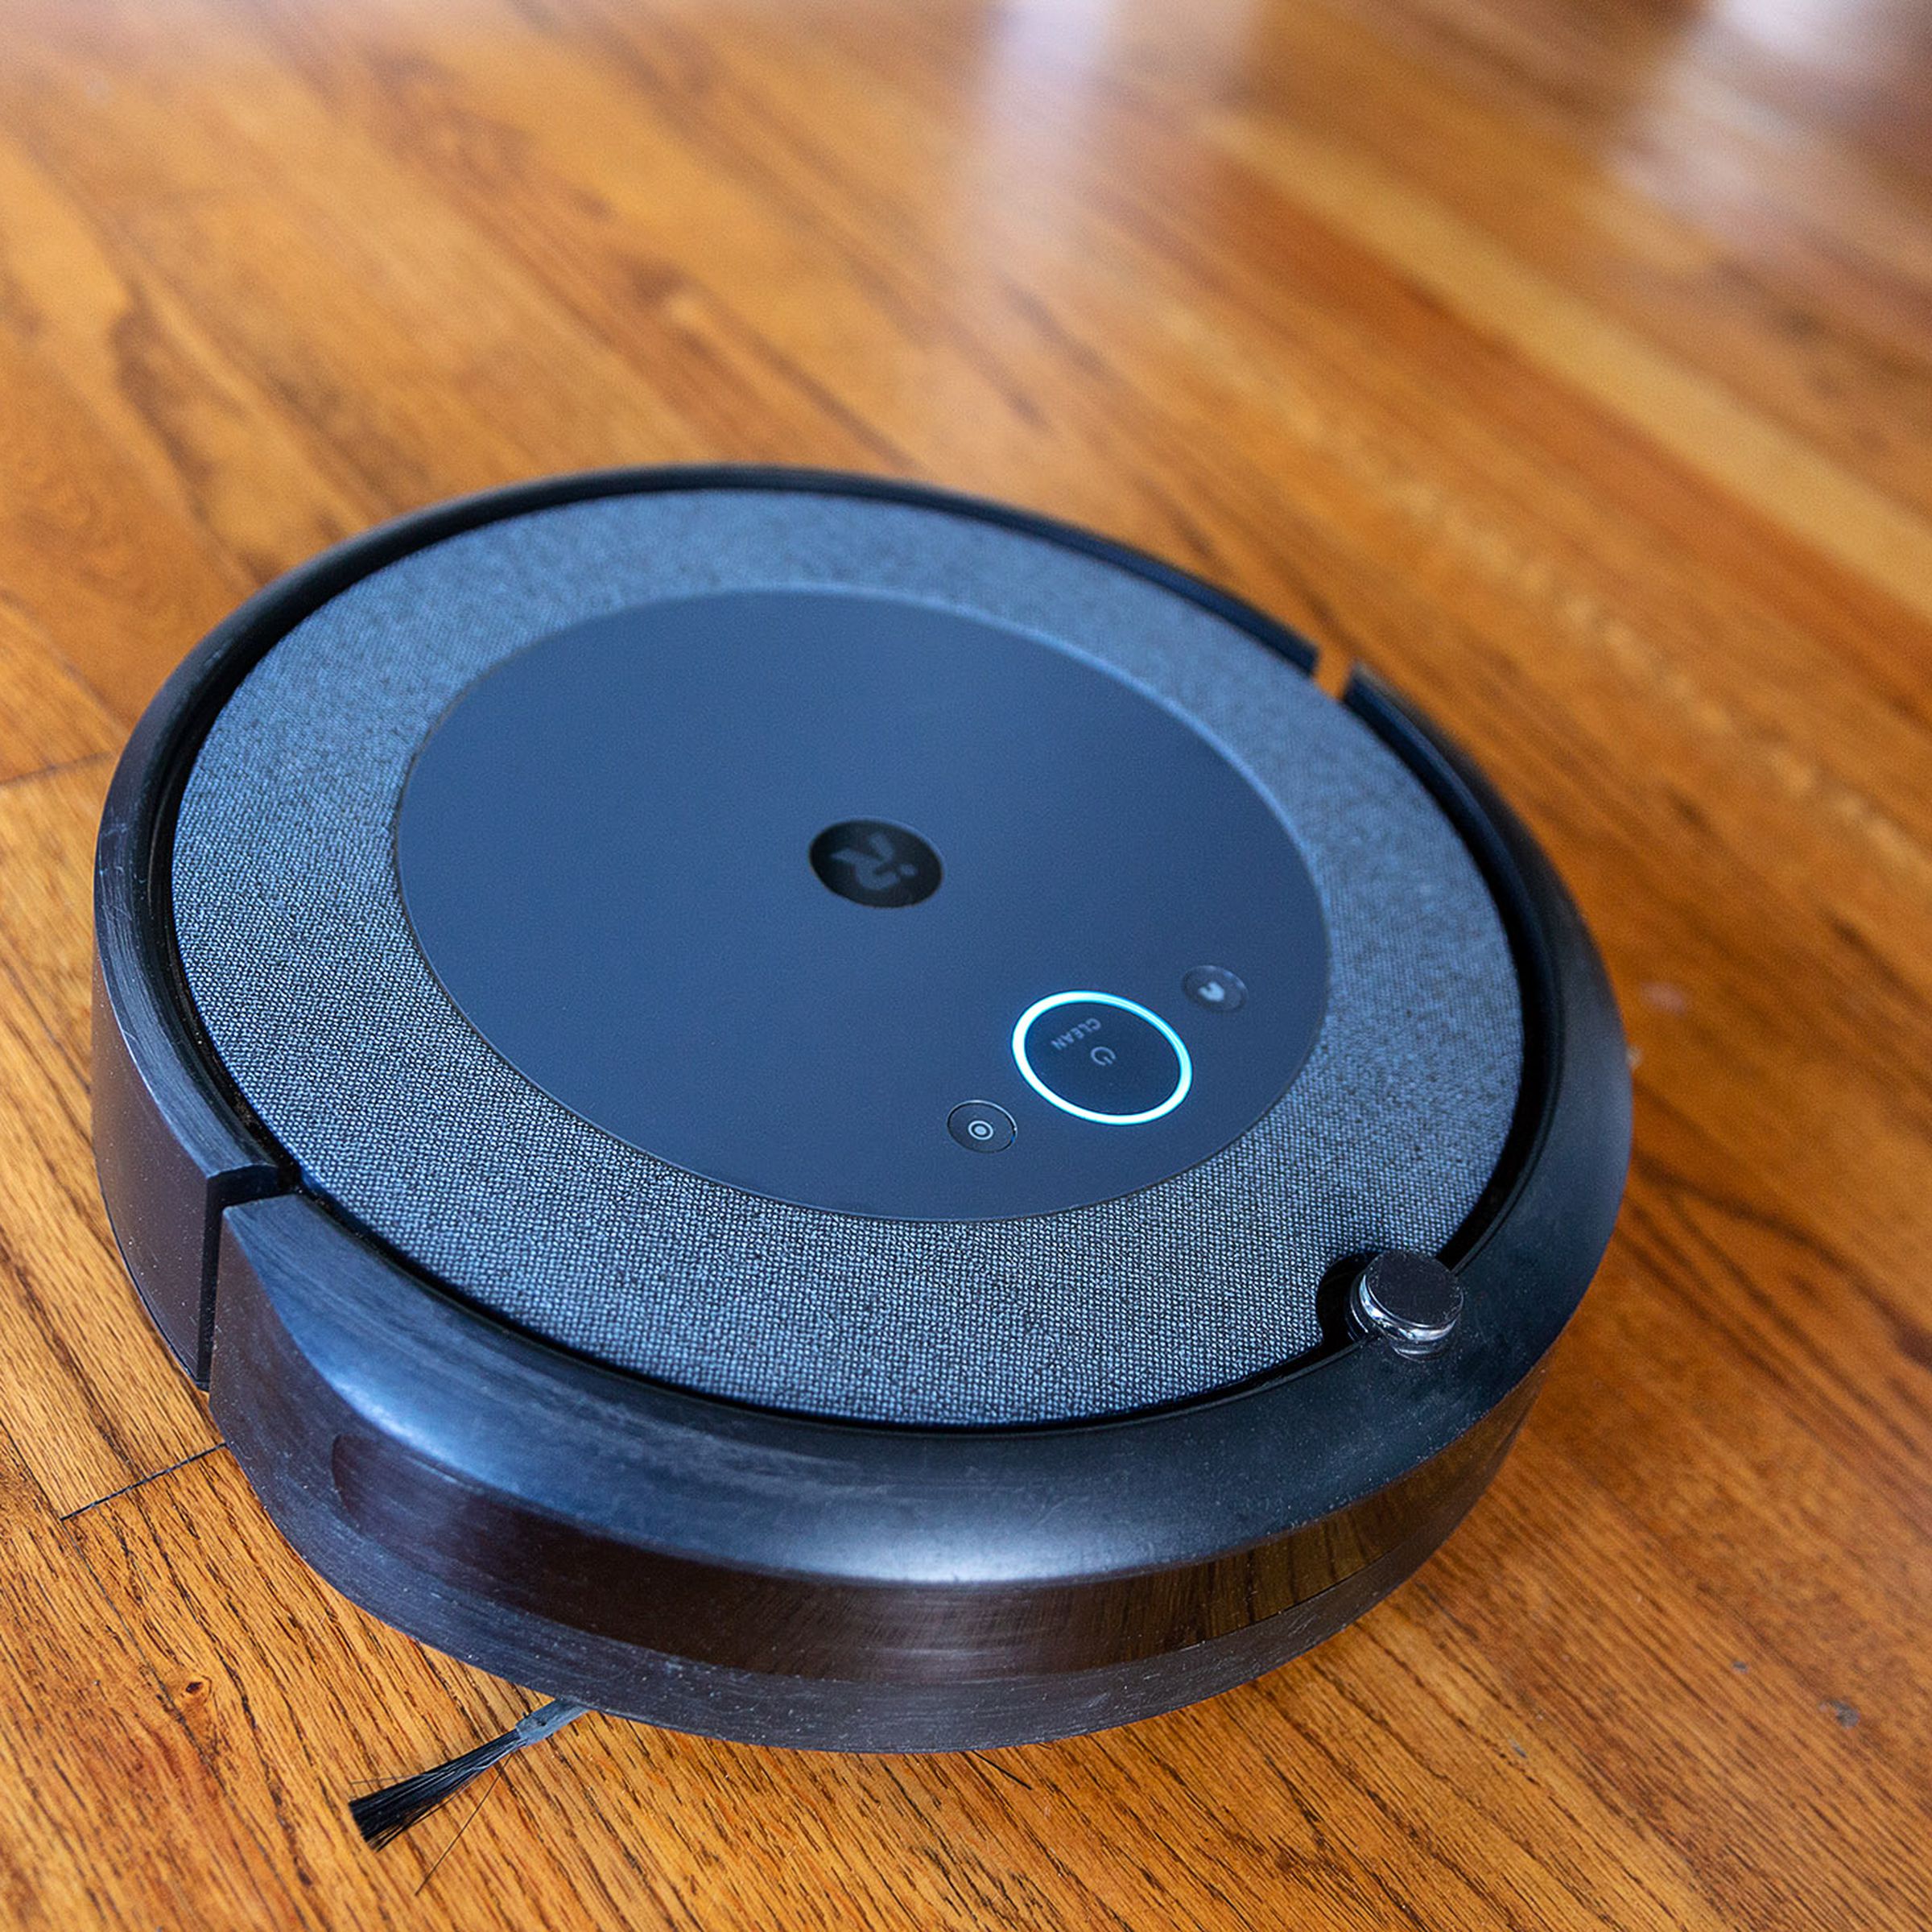 The iRobot Roomba i3 Plus EVO robot vacuum cleaner lies on a wooden floor.